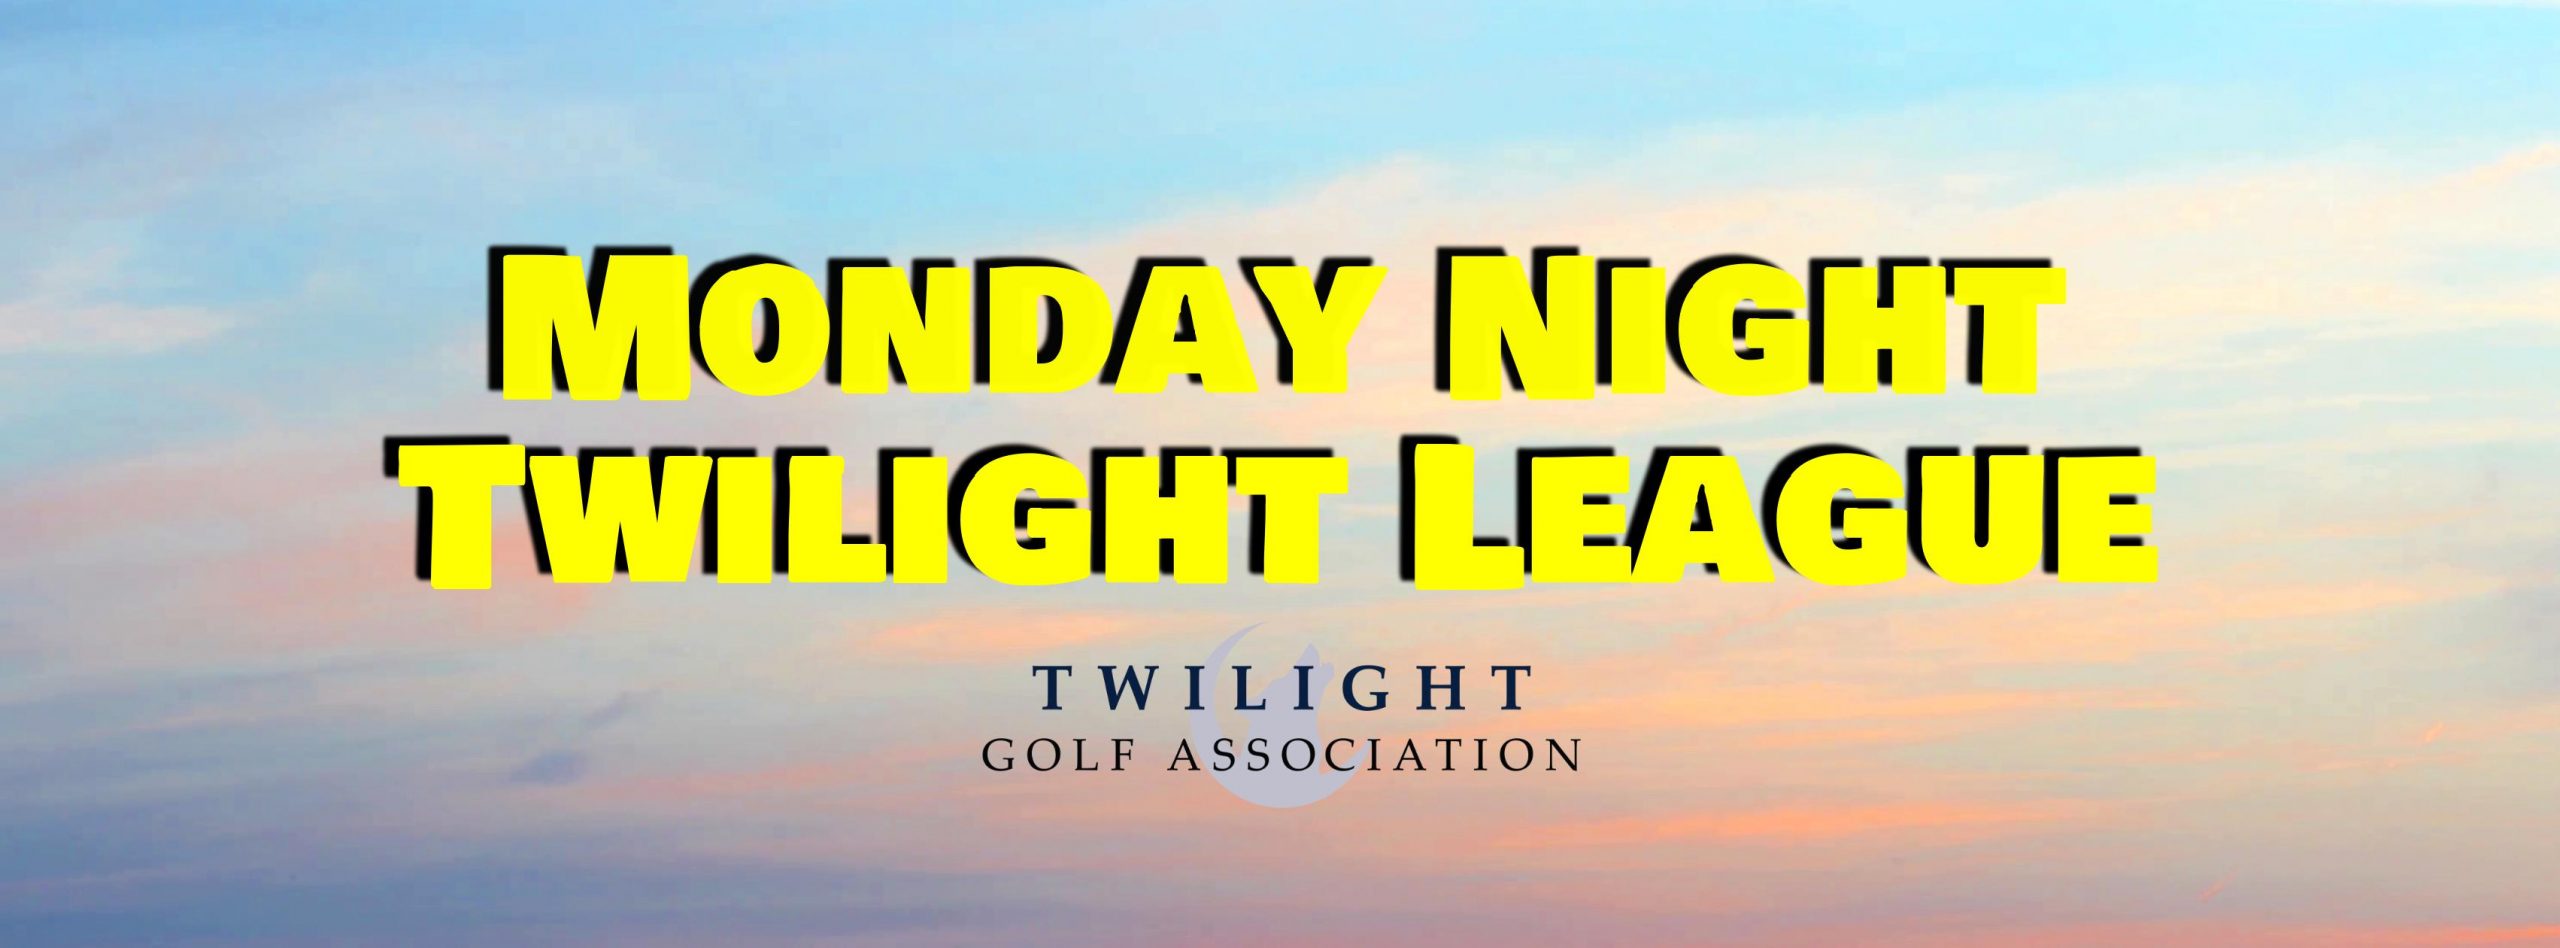 Monday Night Twilight League at Elks Run Golf Club